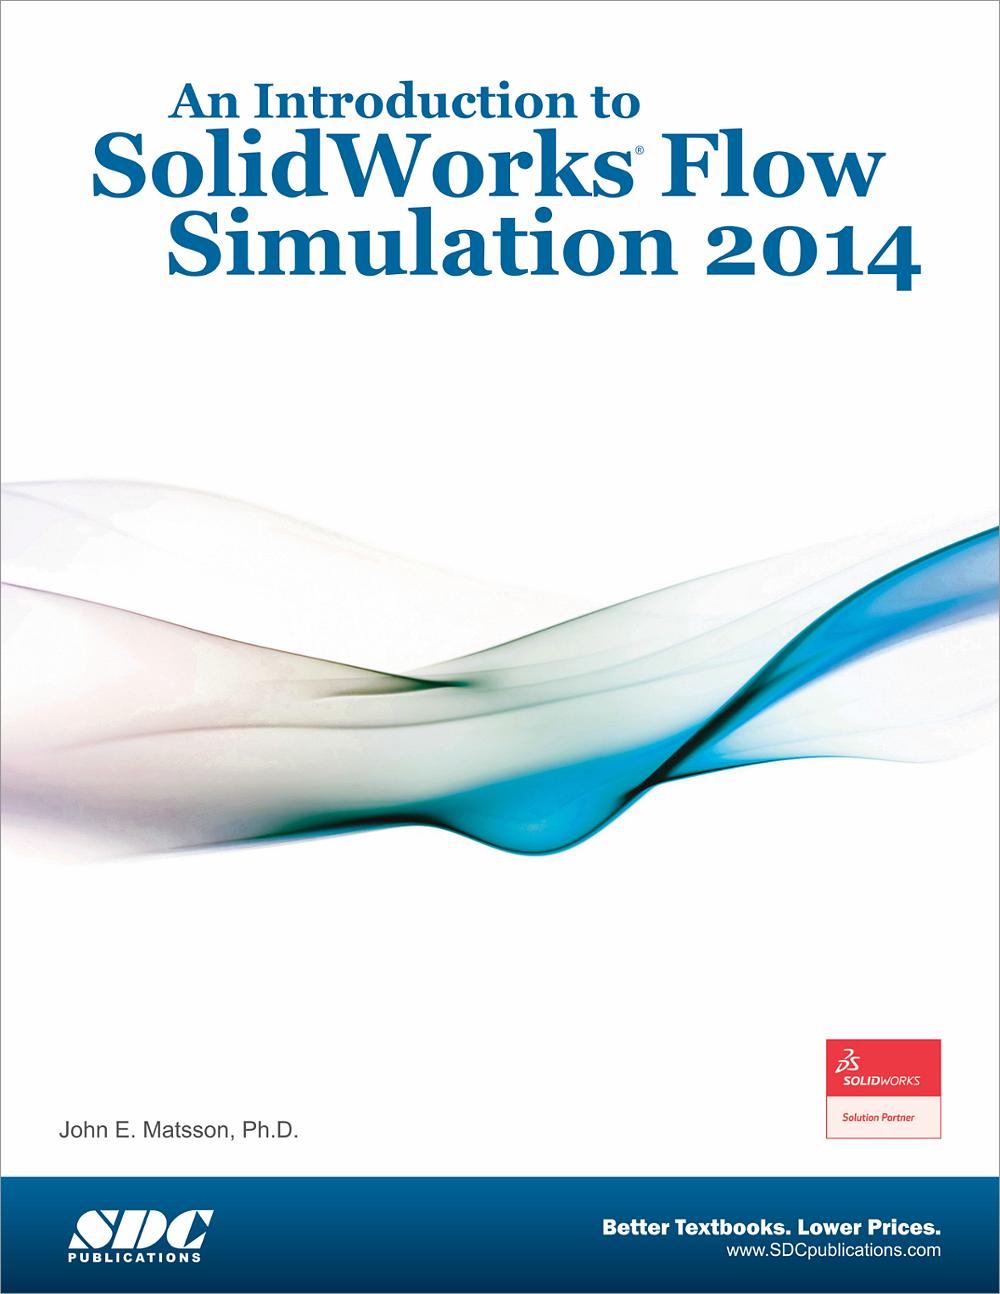 solidworks 2014 flow simulation download